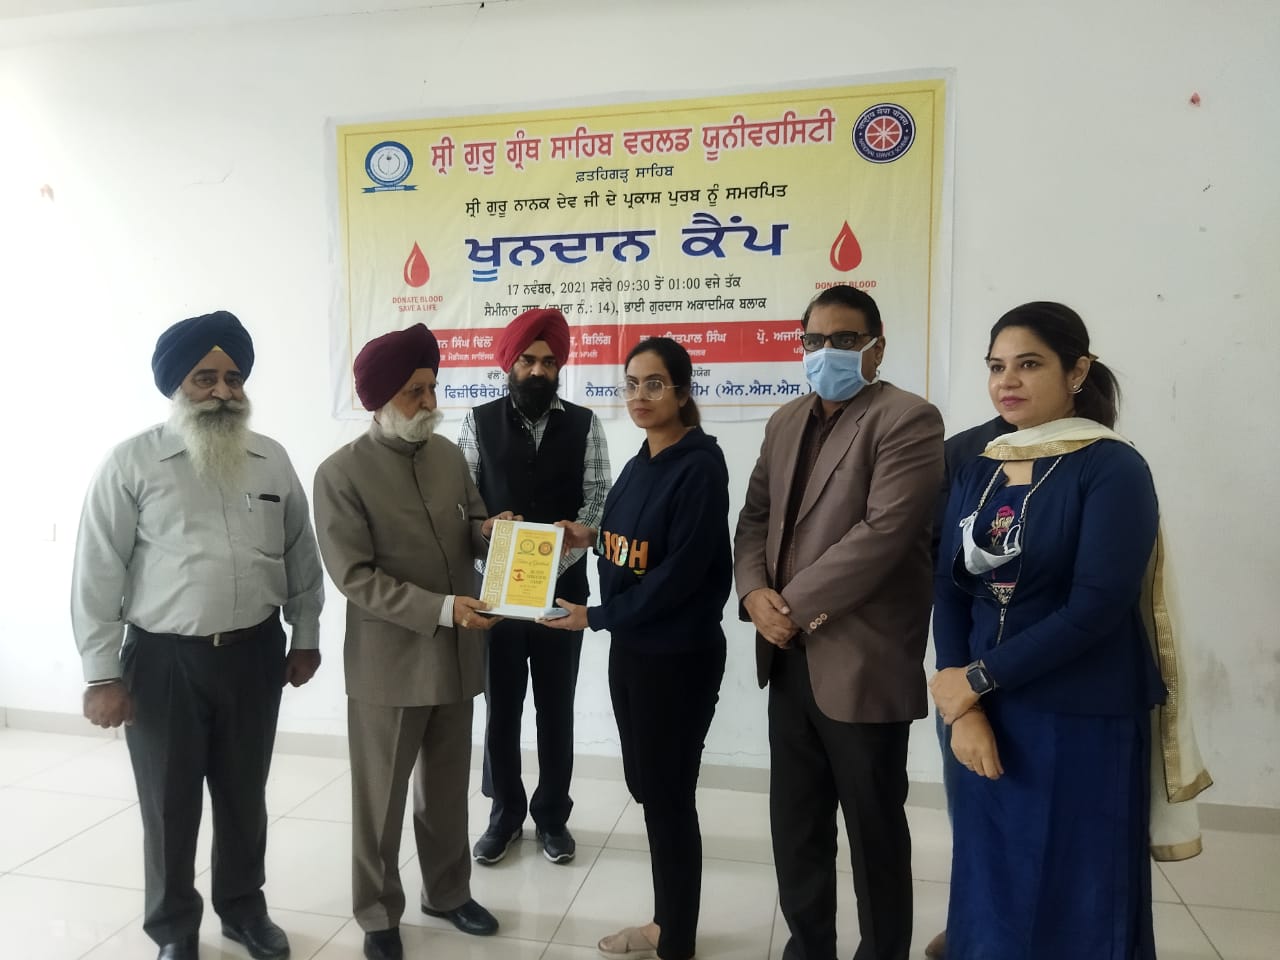 World University organises Medical, Blood Donation Camps dedicated to Sri Guru Nanak Dev ji